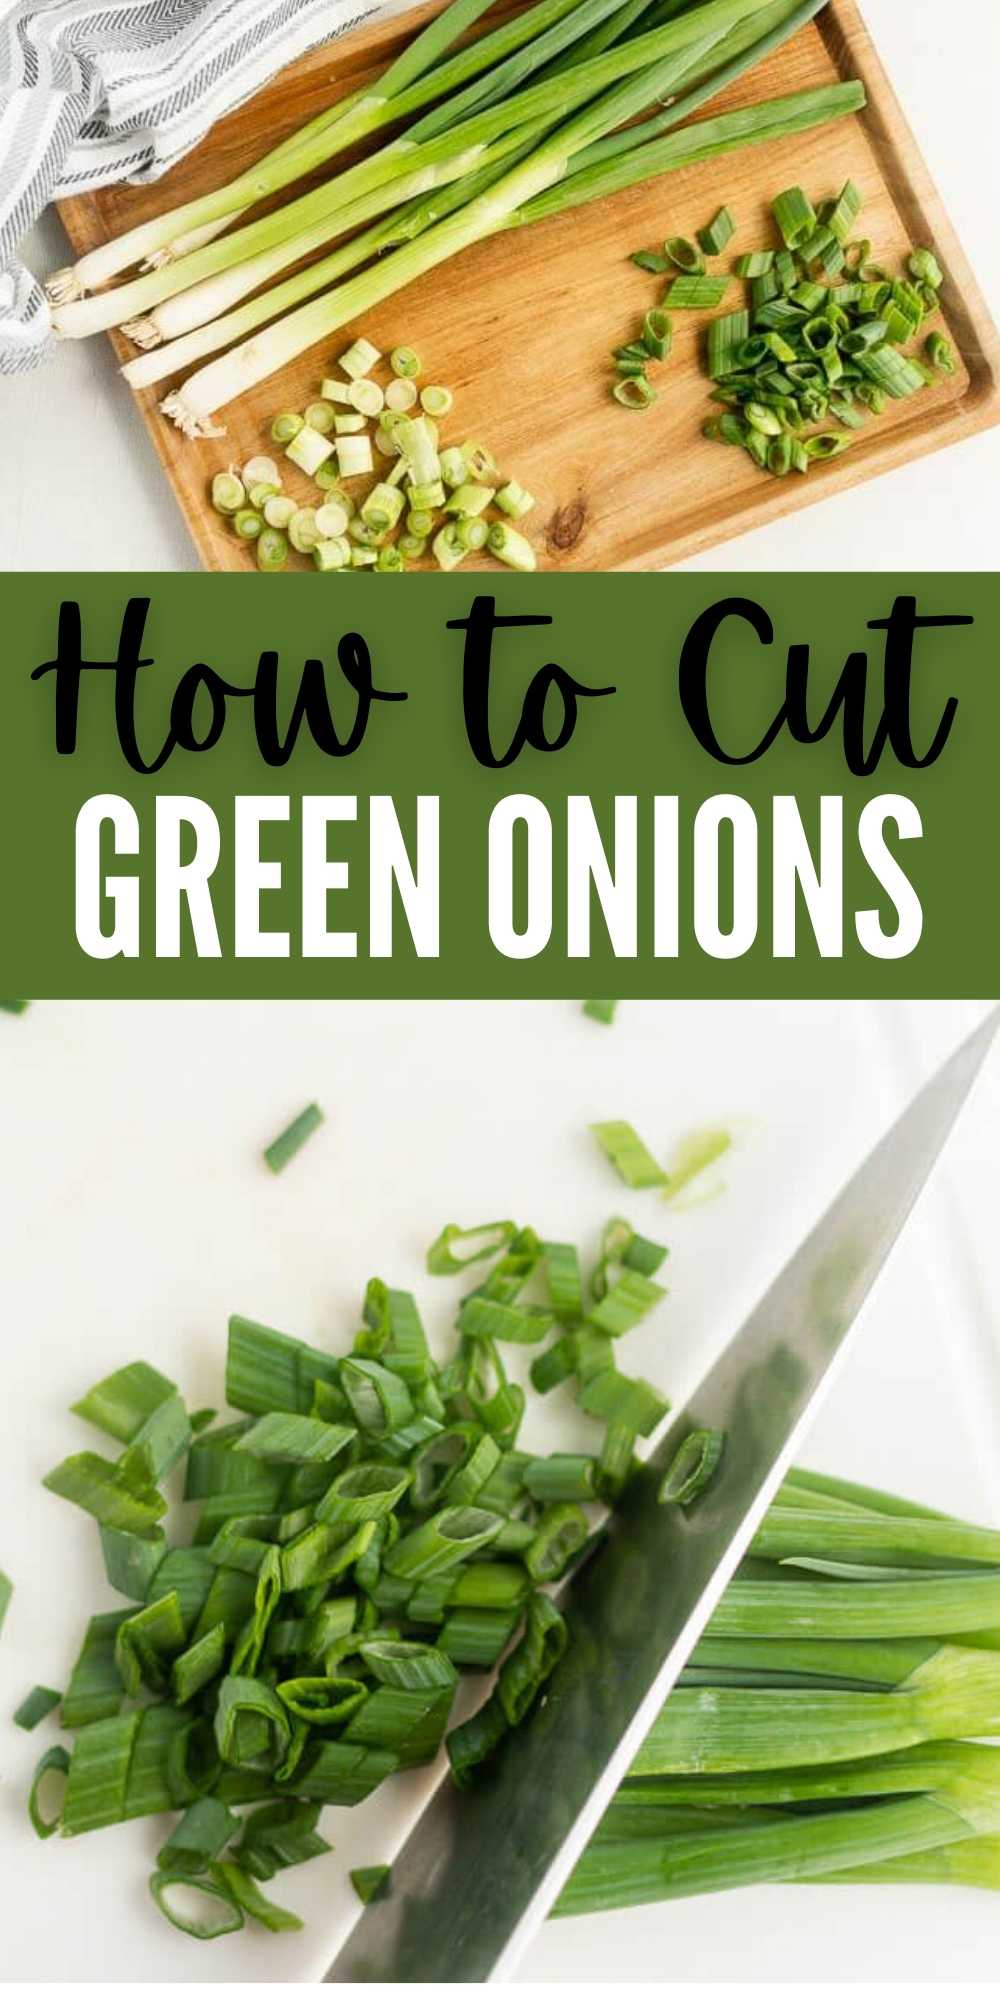 https://www.eatingonadime.com/wp-content/uploads/2022/04/How-to-Cut-Green-Onions-3.jpg